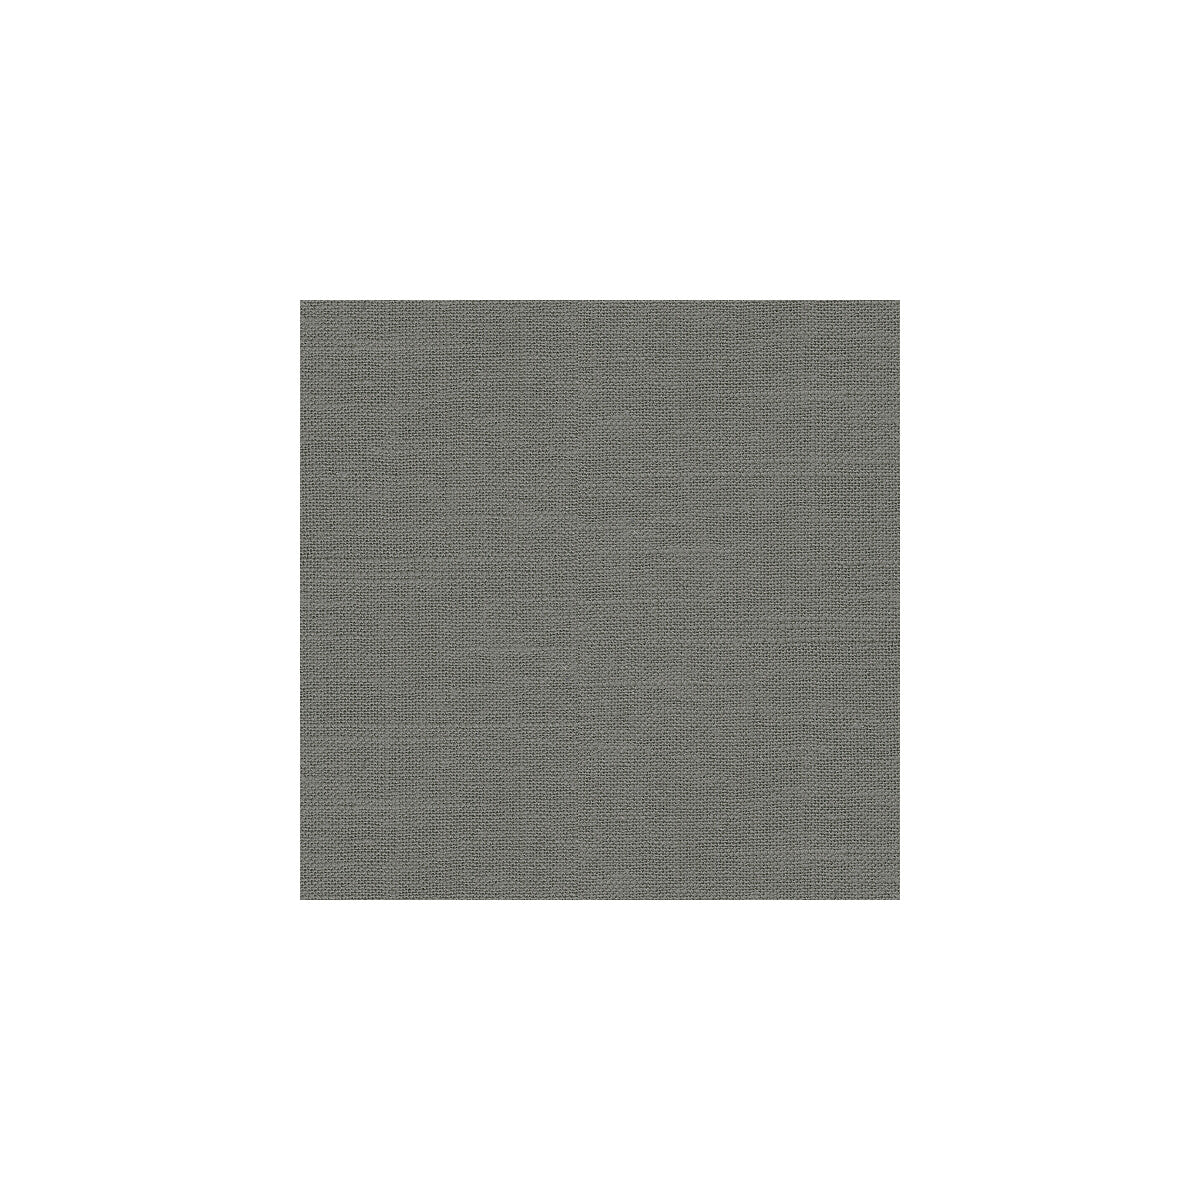 Barnegat fabric in ash color - pattern 24573.311.0 - by Kravet Basics